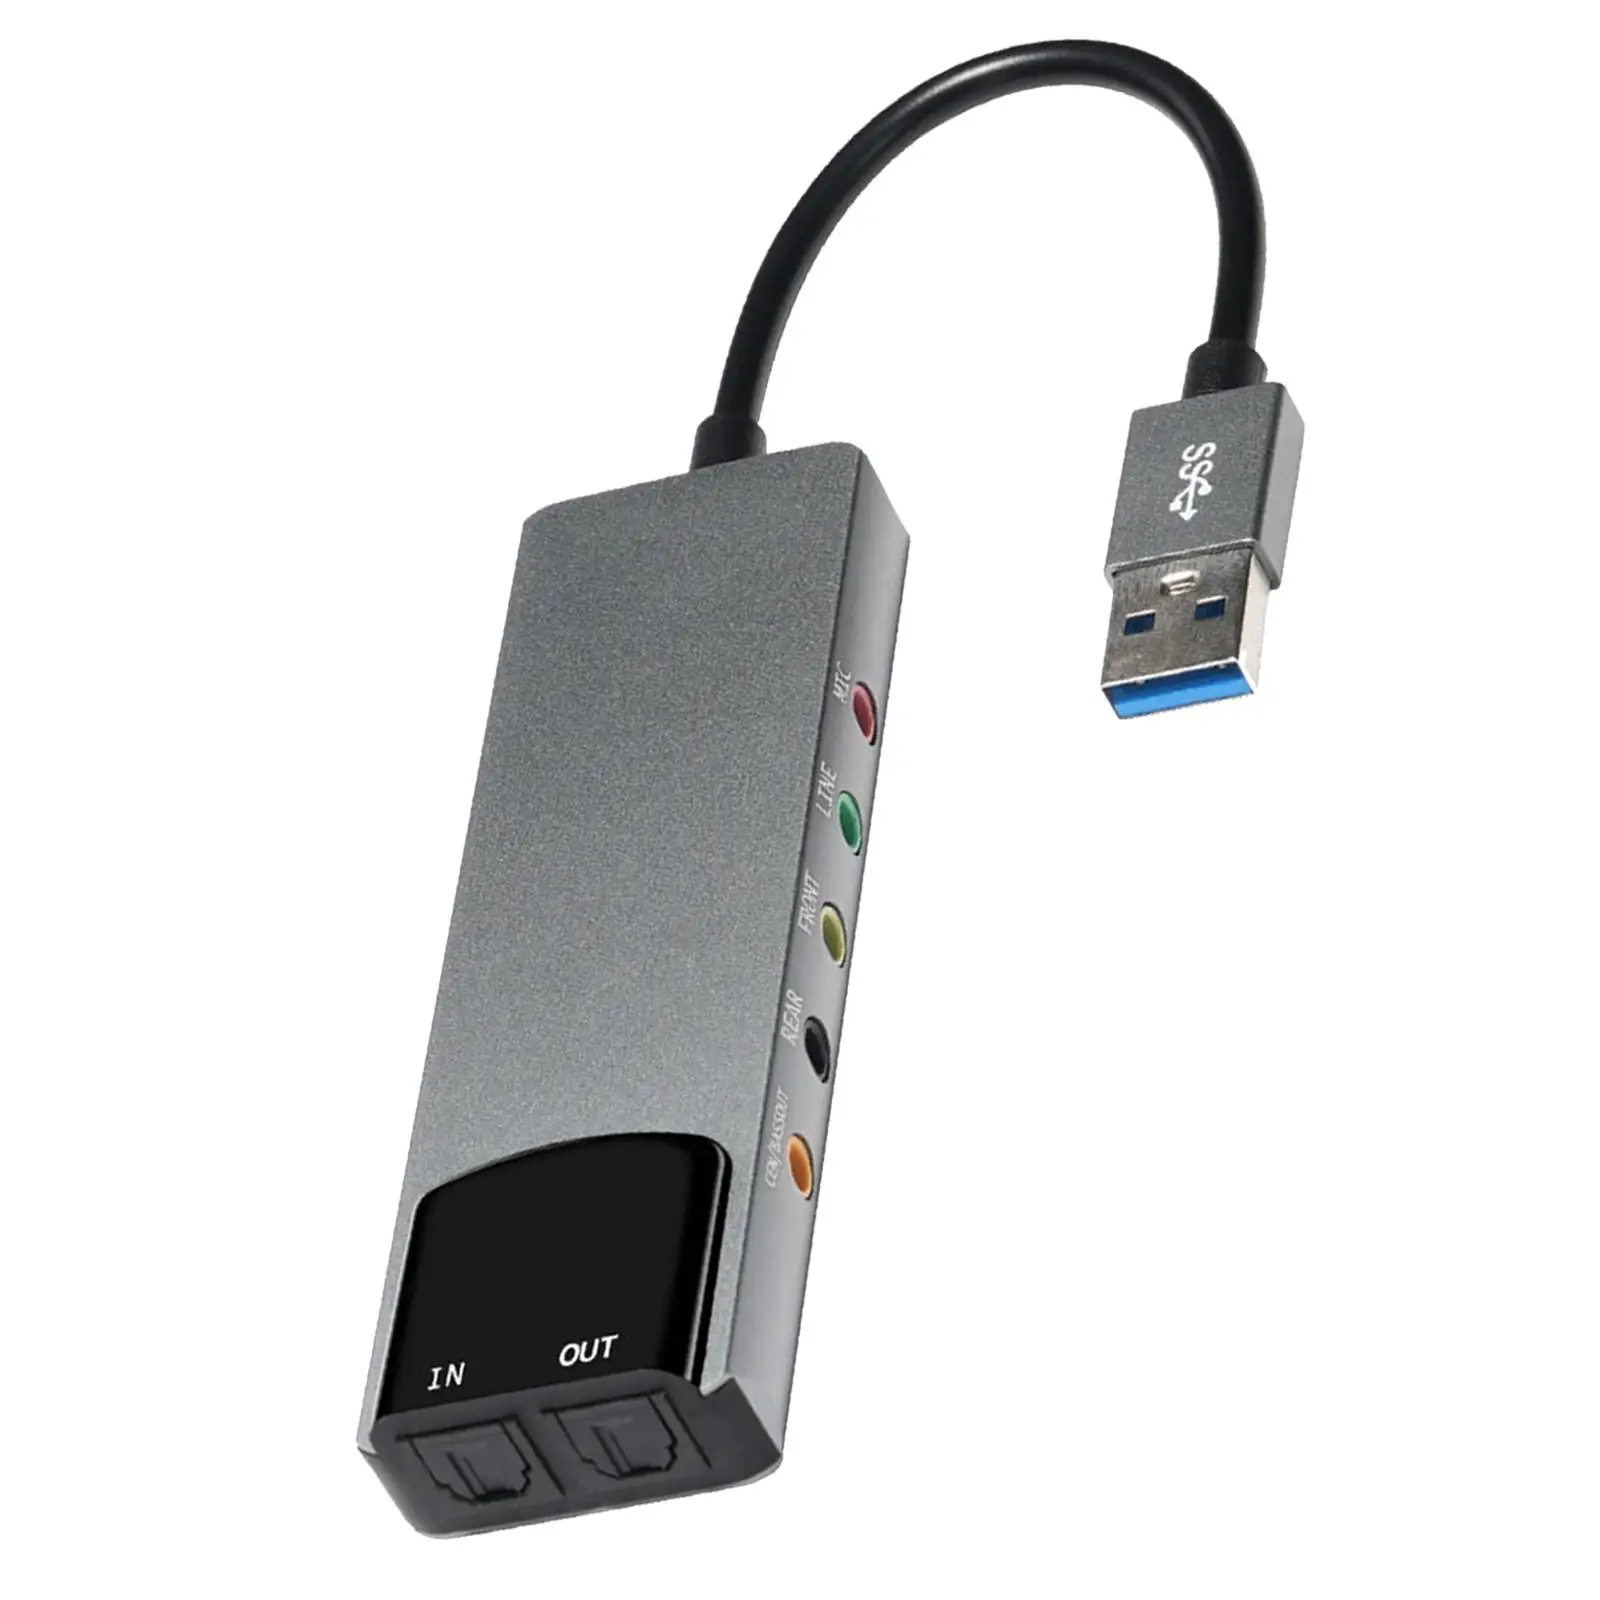 USB Sound Card Adapter Premium External Audio Converter Stereo Sound Card Converter External Audio Adapter for Laptops Desktops